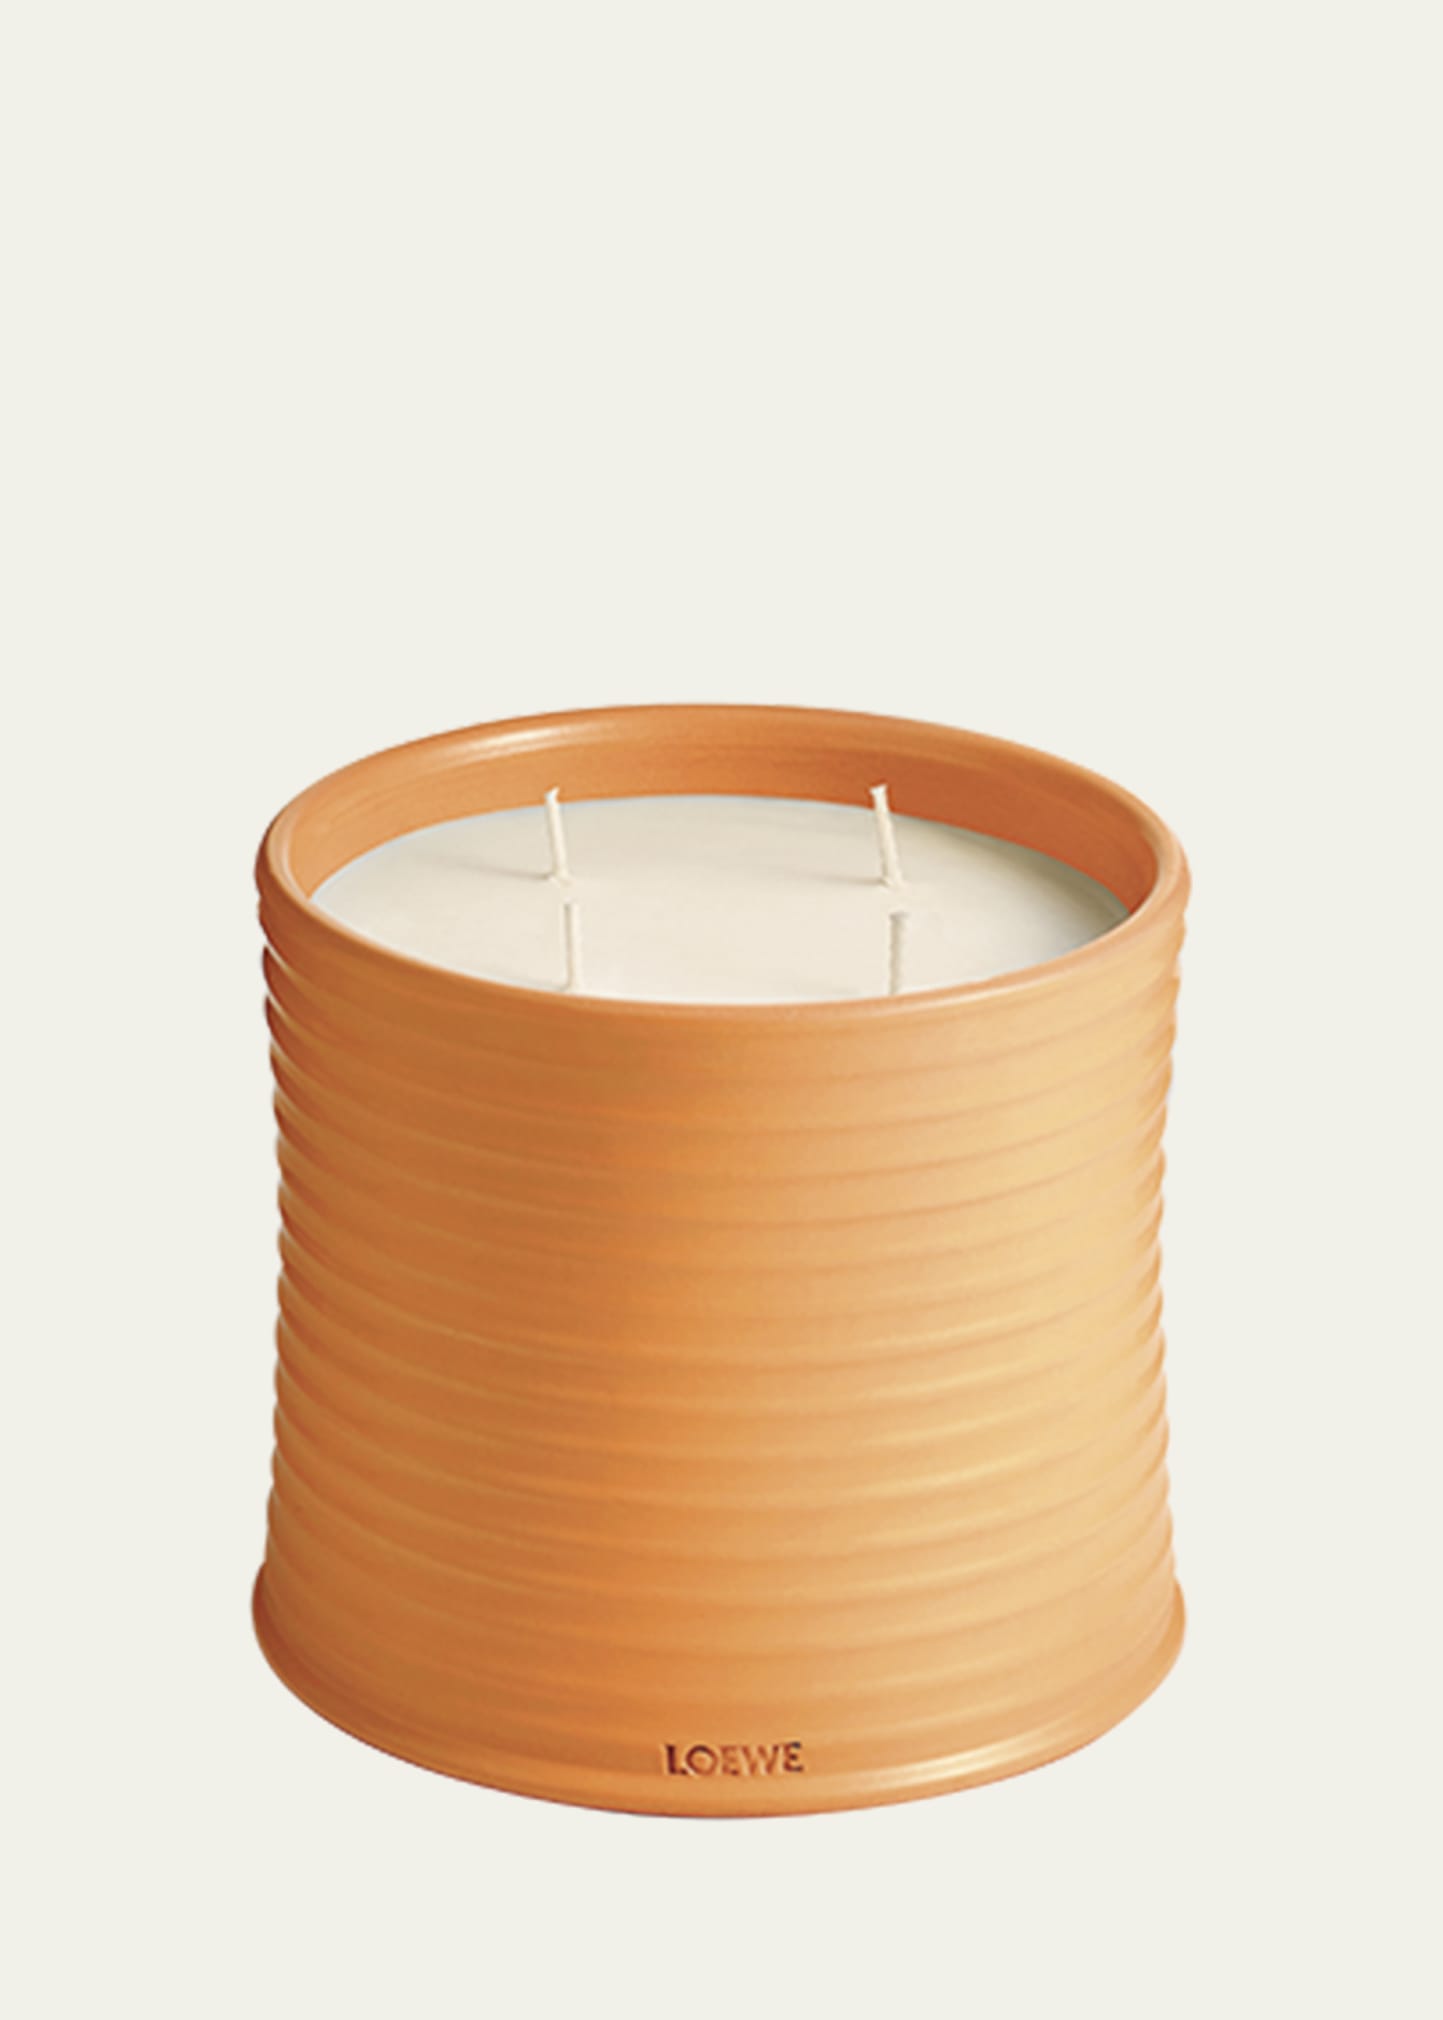 Loewe Orange Blossom Candle, 2120 G